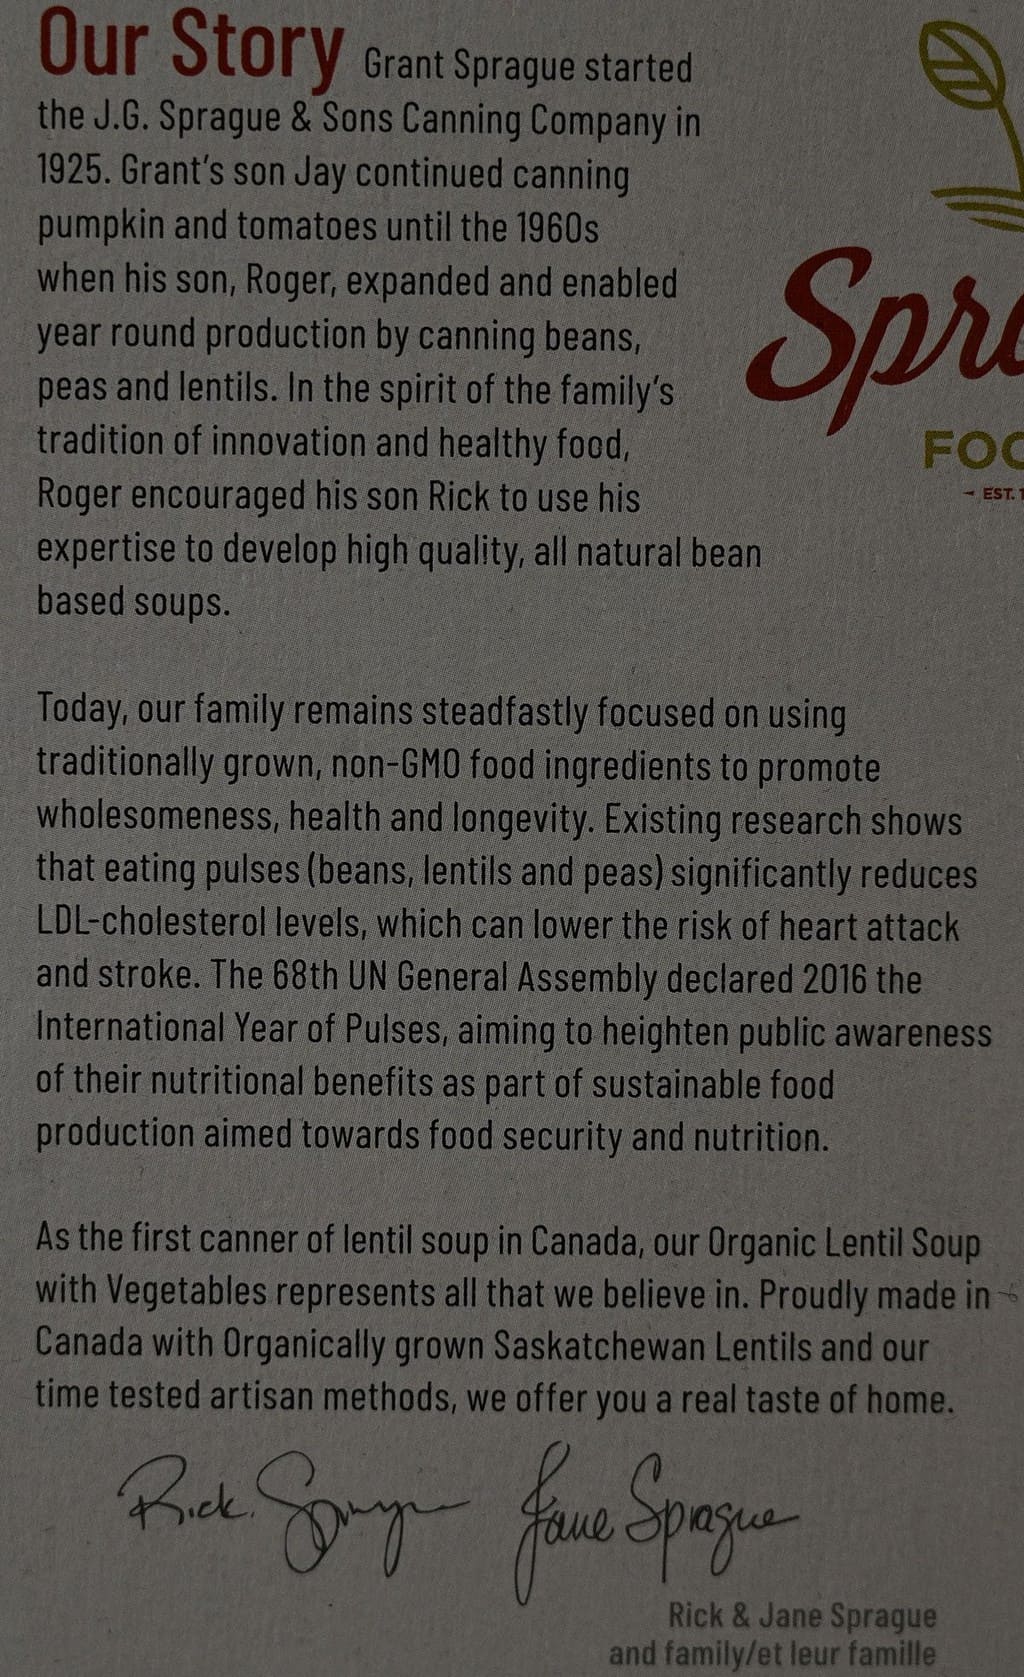 Costco Sprague Organic Lentil Soup company story from box. 